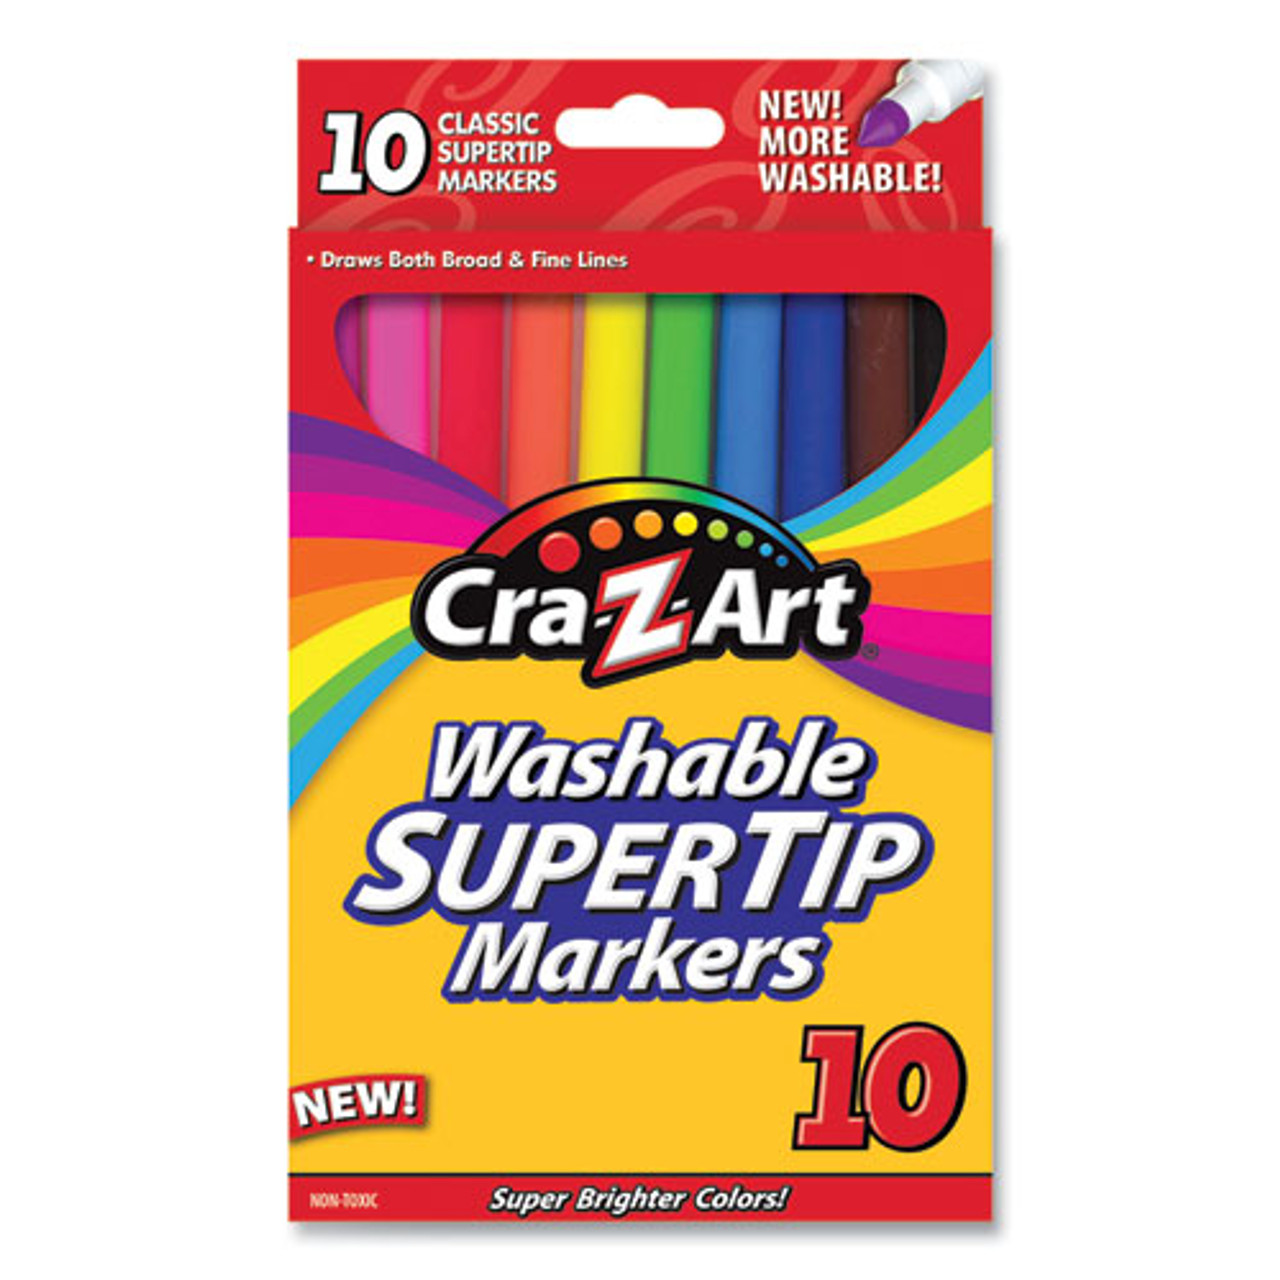 Crayola Super Tips Washable Markers 100 unique colors washable - CYO585100  